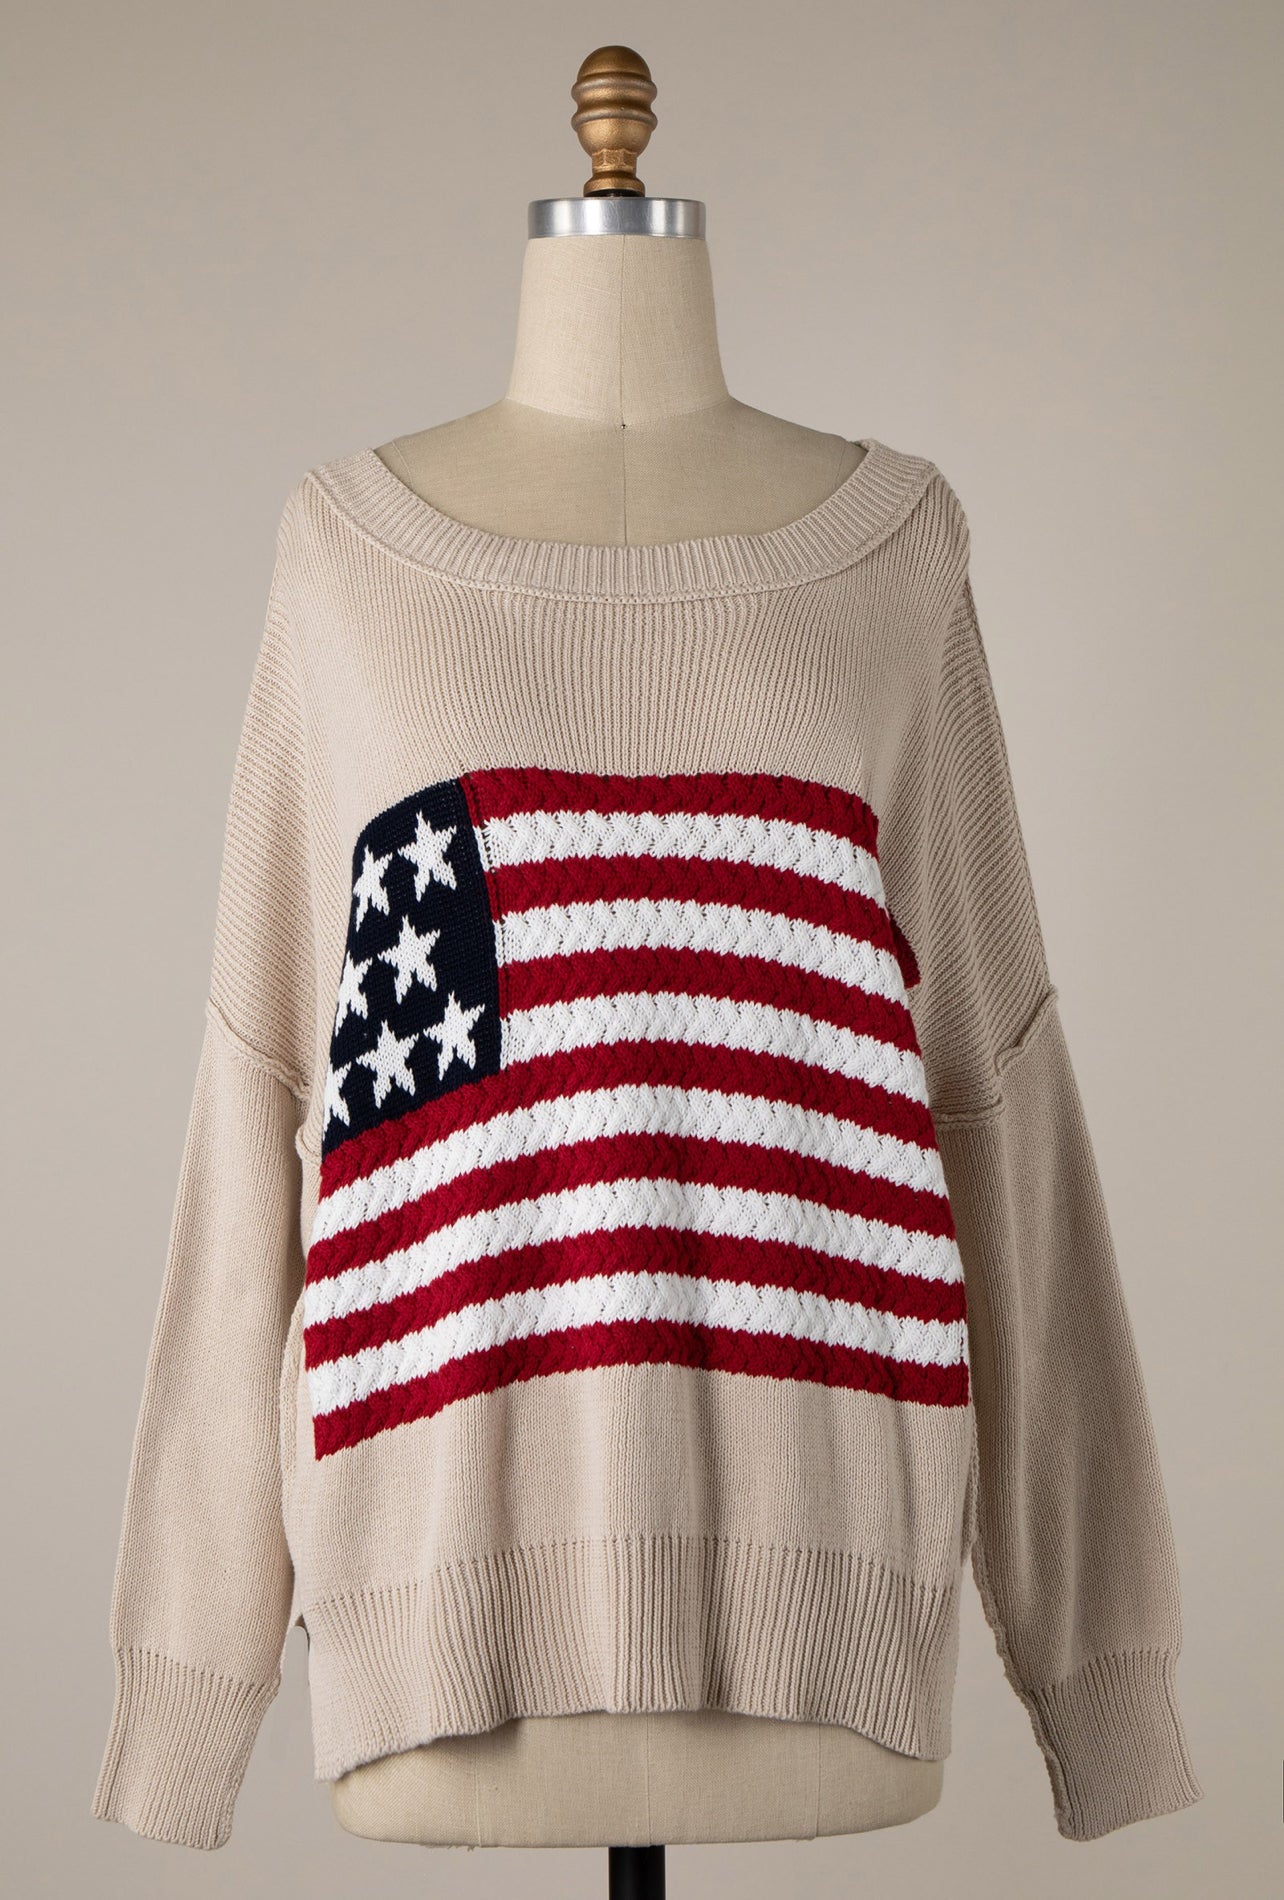 American Flag Crochet Sweater